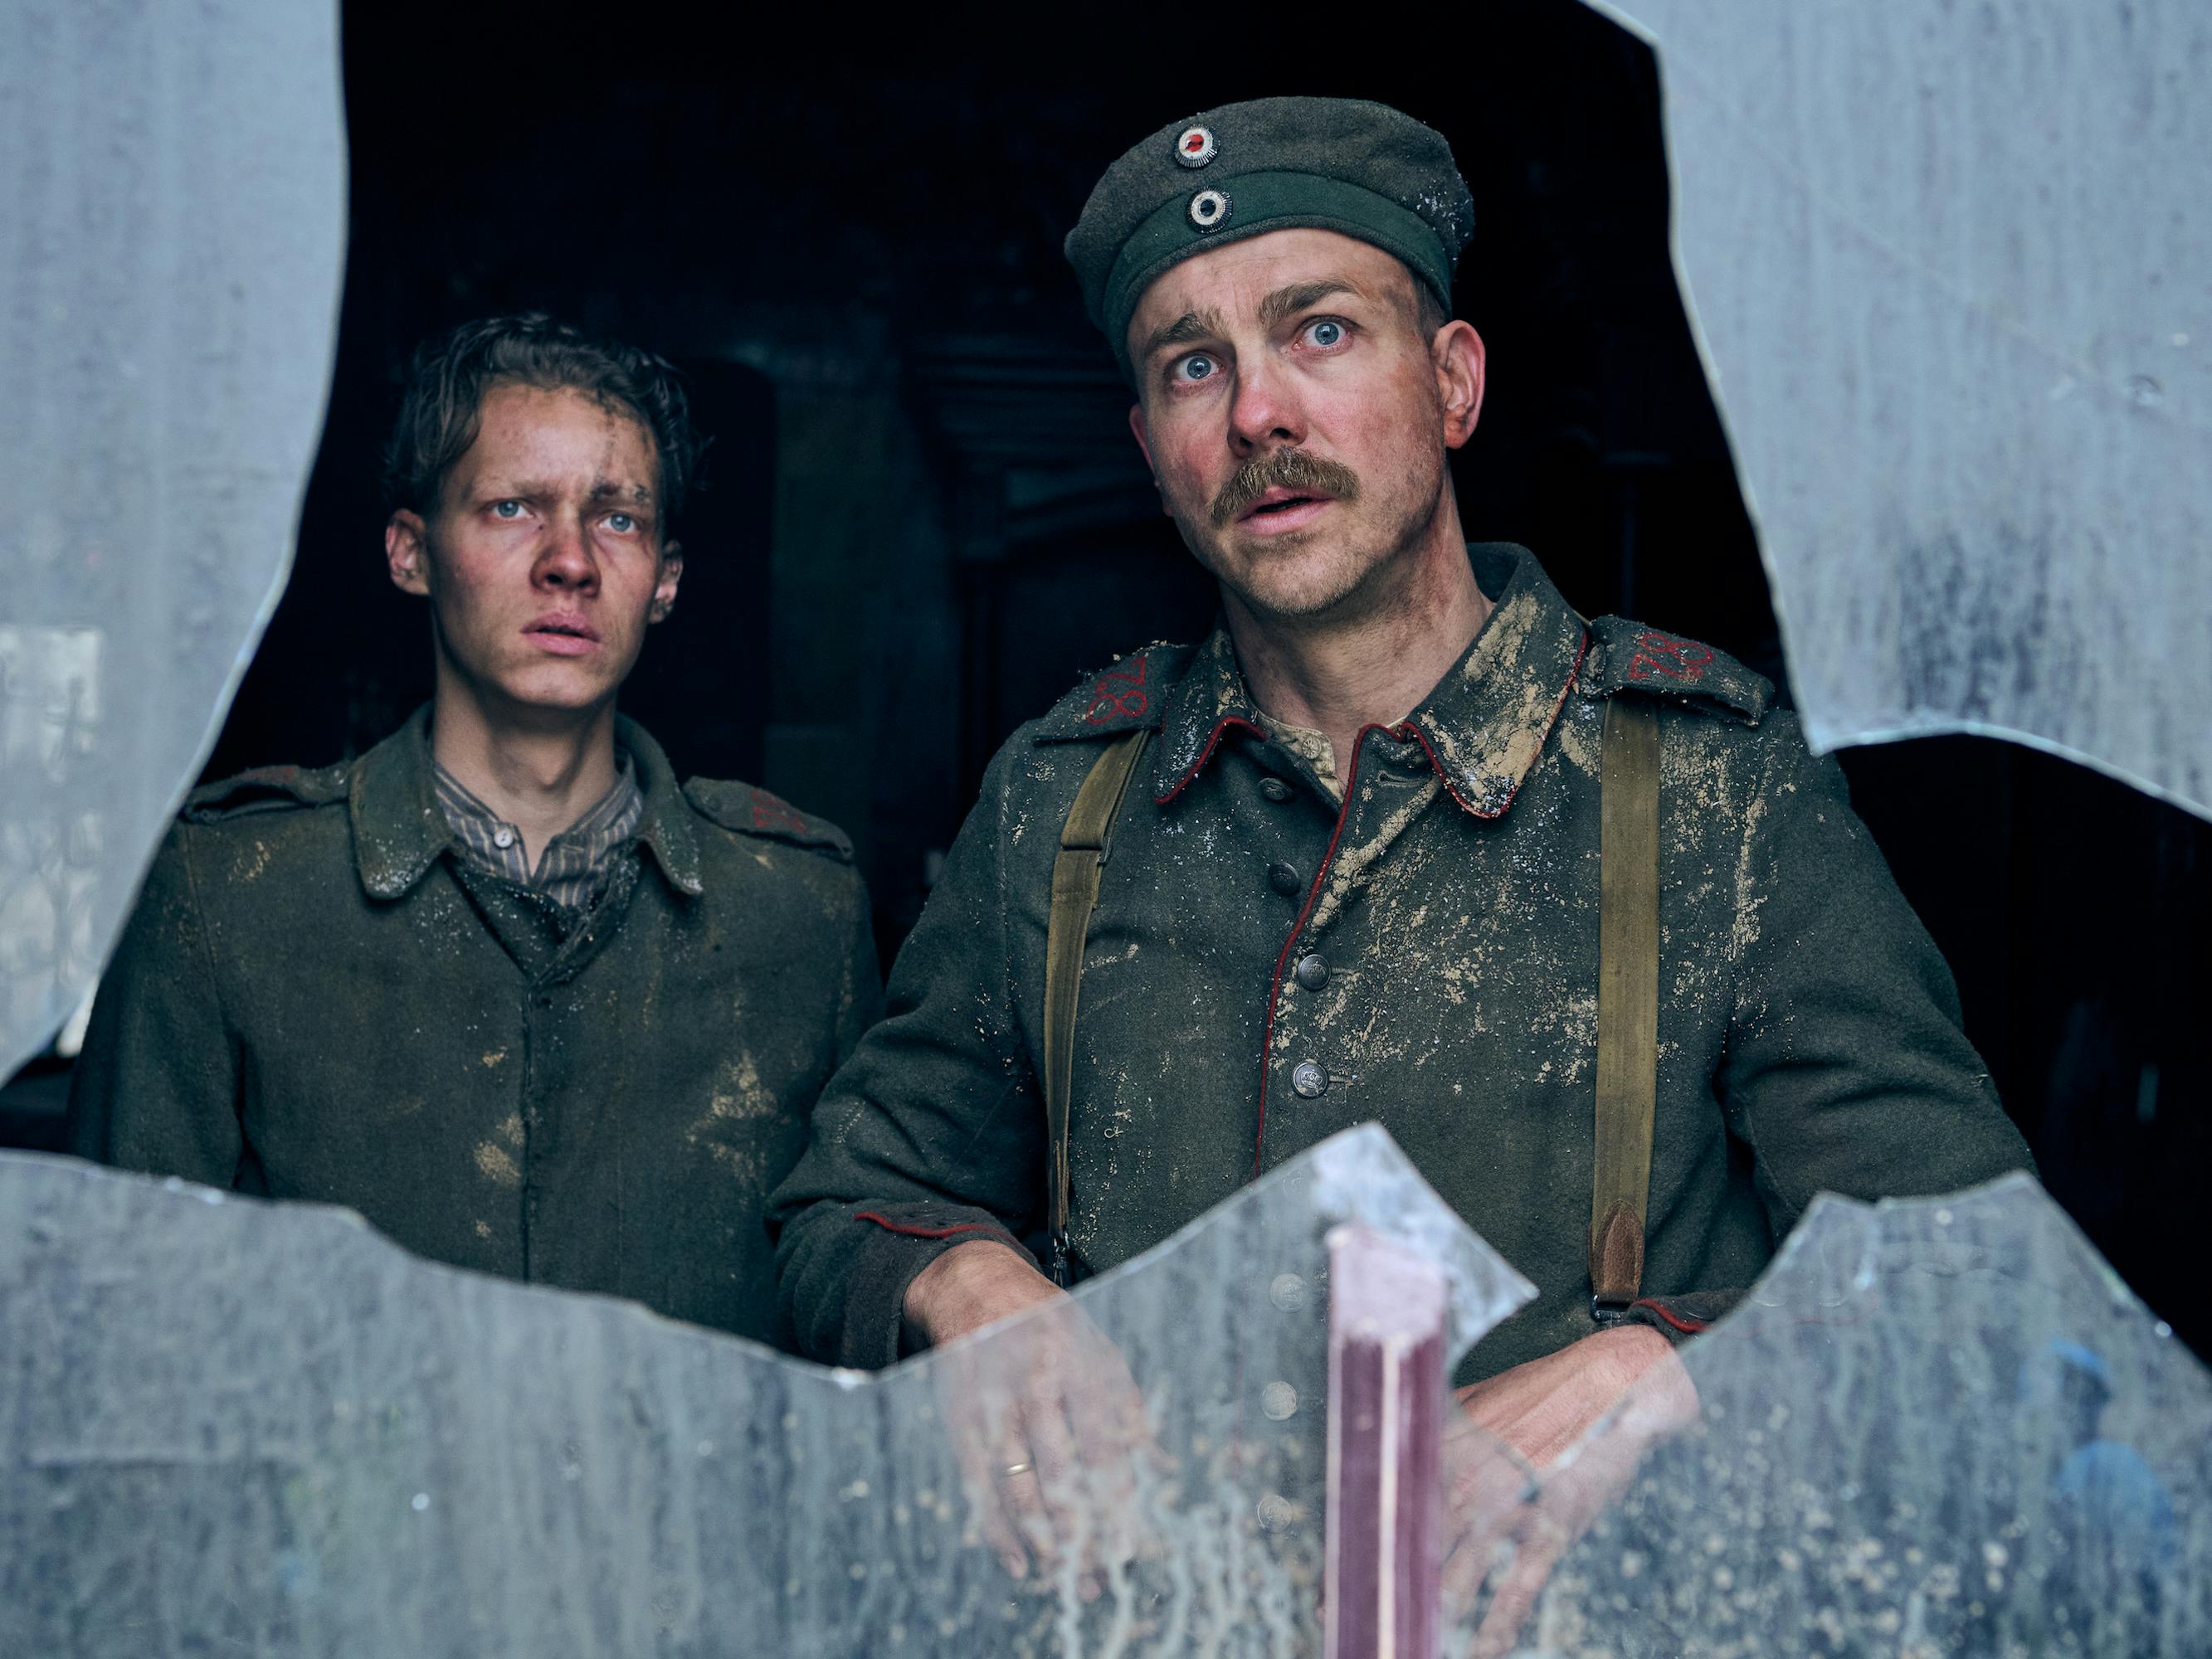 Paul Bäumer (Felix Kammerer) and Stanislaus Katczinsky (Albrecht Schuch) stand together behind a broken window in their green uniforms dusted with sawdust.